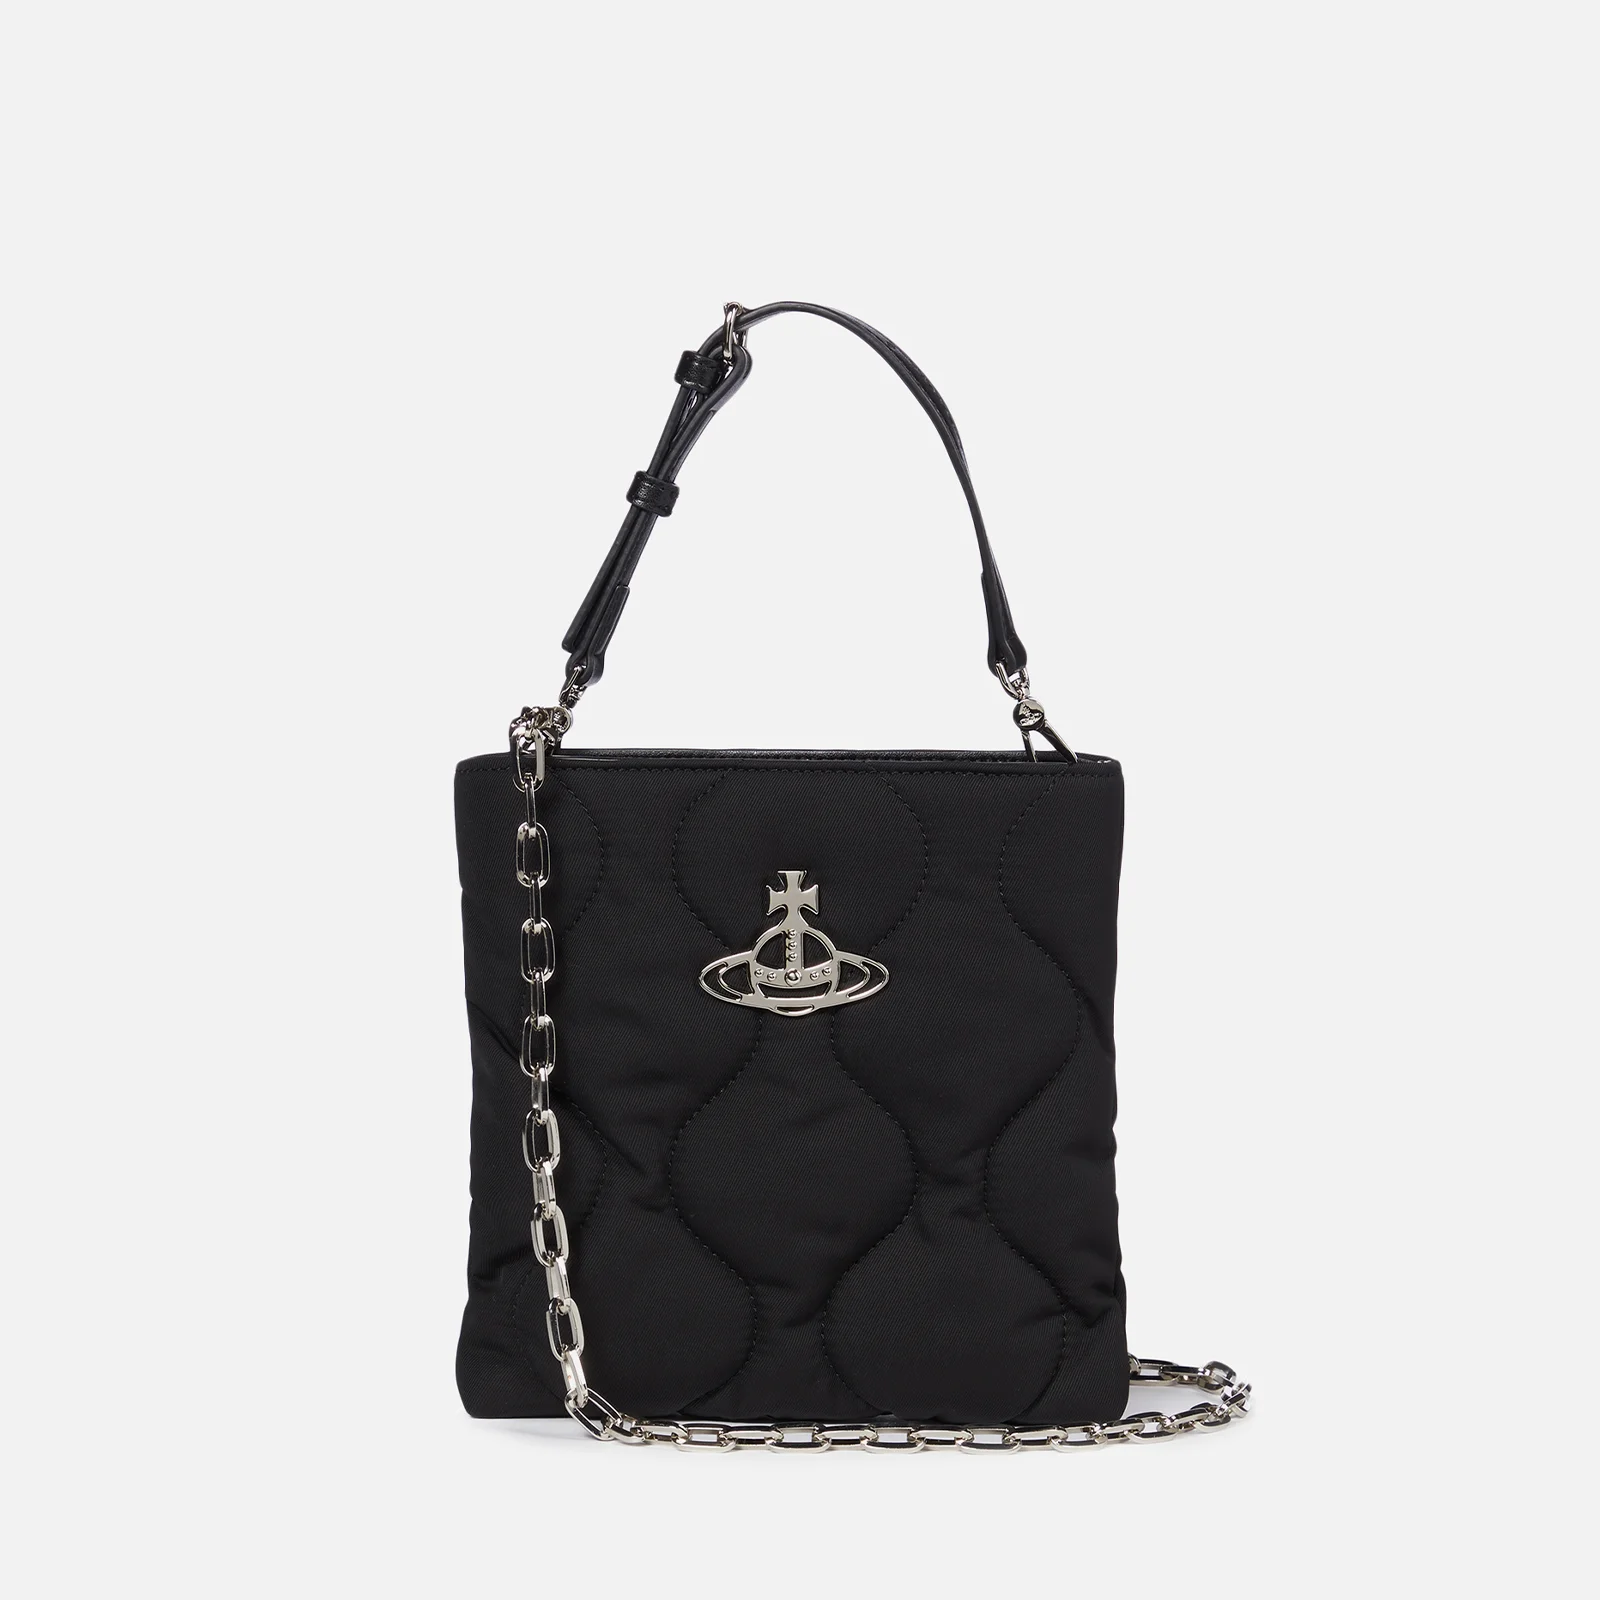 Vivienne Westwood Women's Camper Square Cross Body Bag - Black Image 1